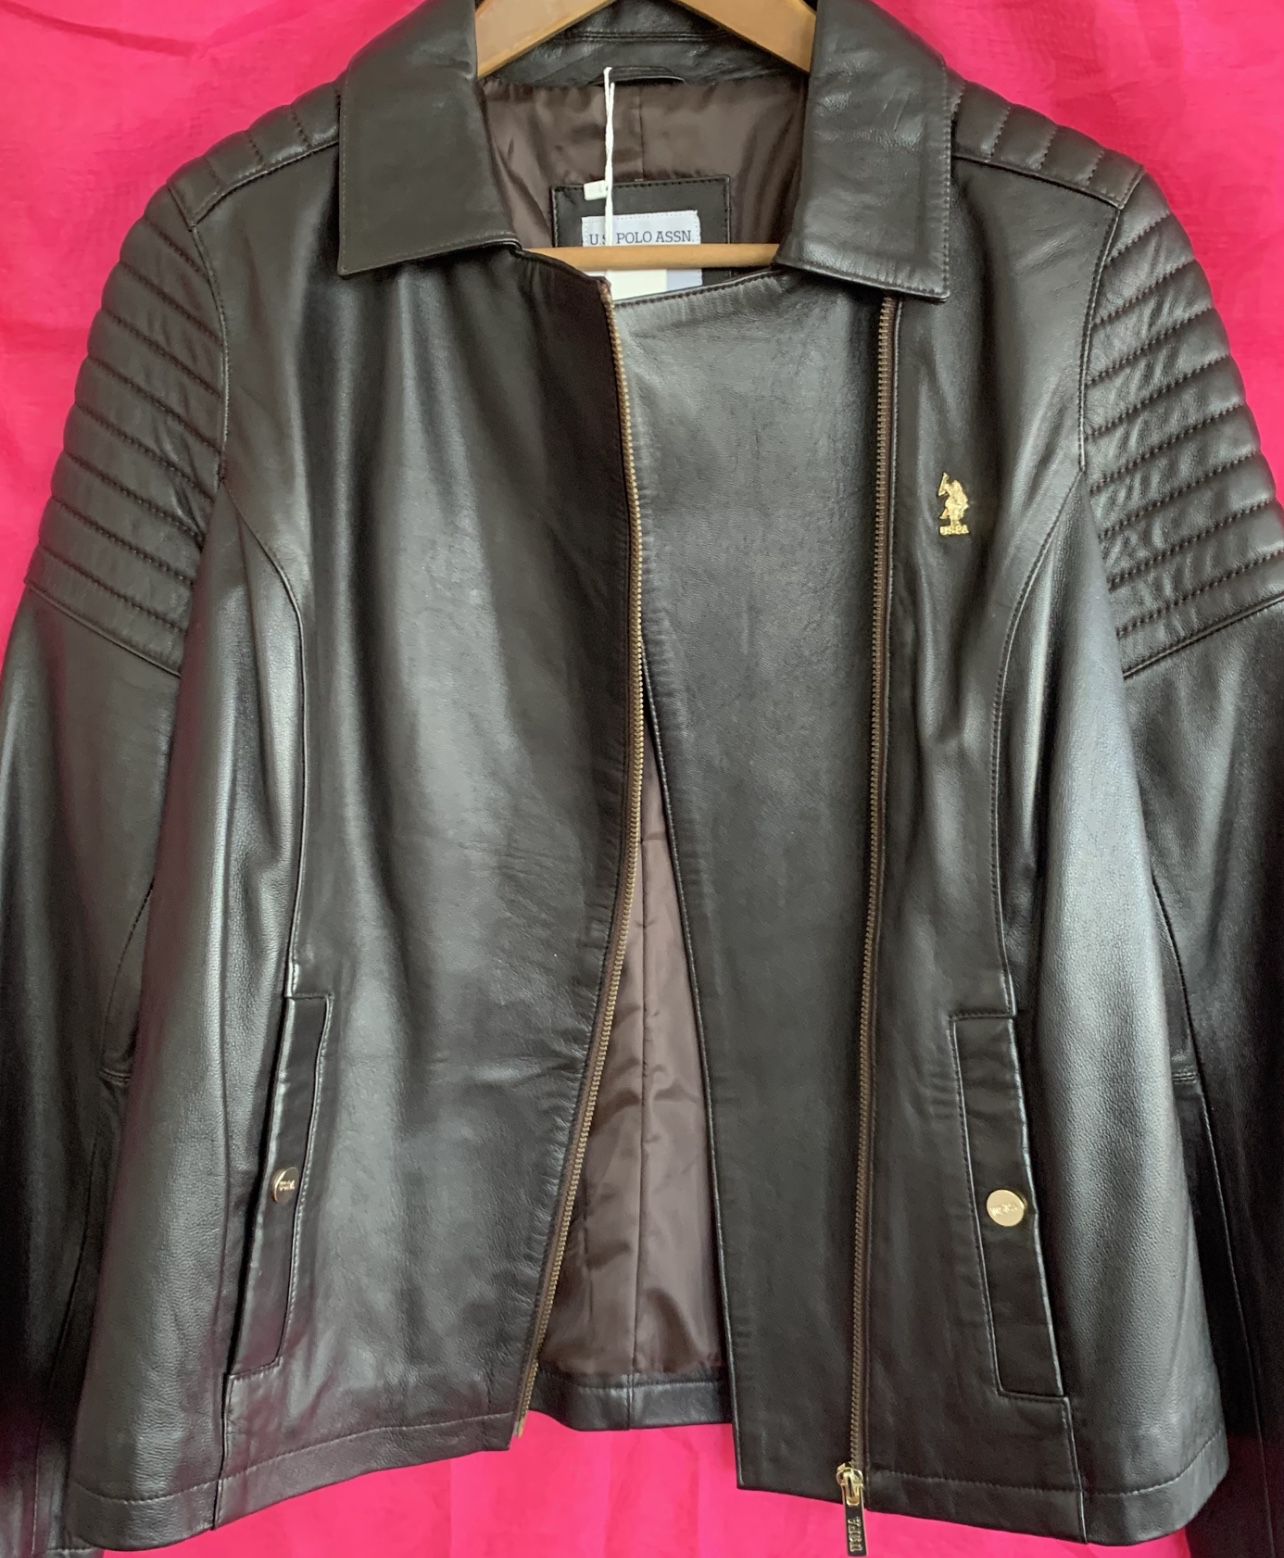 Stylish women leather jacket U.S.POLO Stylish women’s shoes,made of leather.Size 6.5  Brand New.Price $270